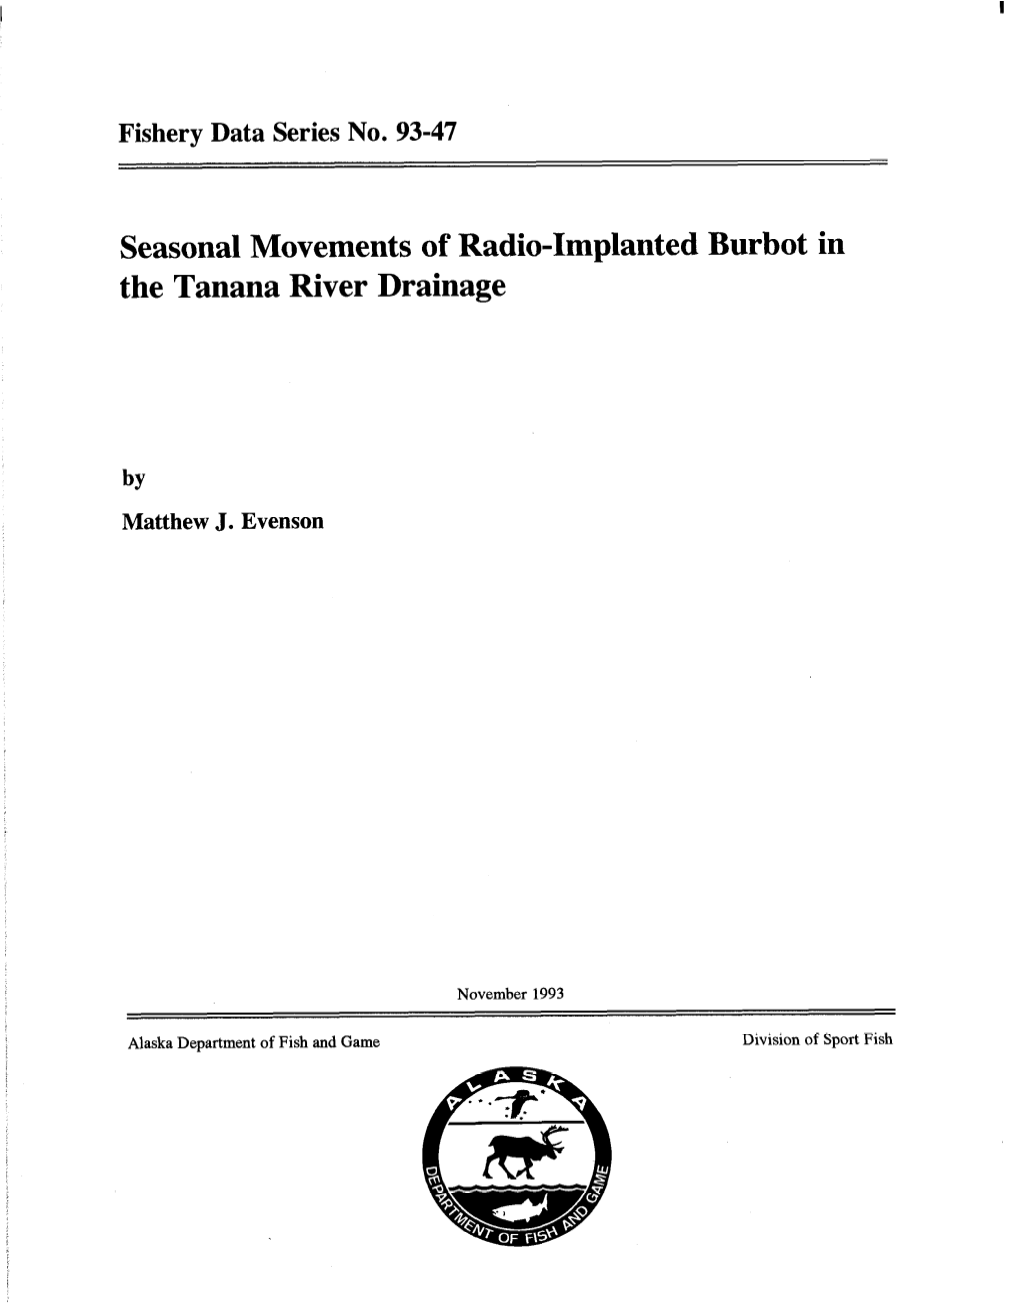 Seasonal Movements of Radio-Implanted Burbot in the Tanana River Drainage